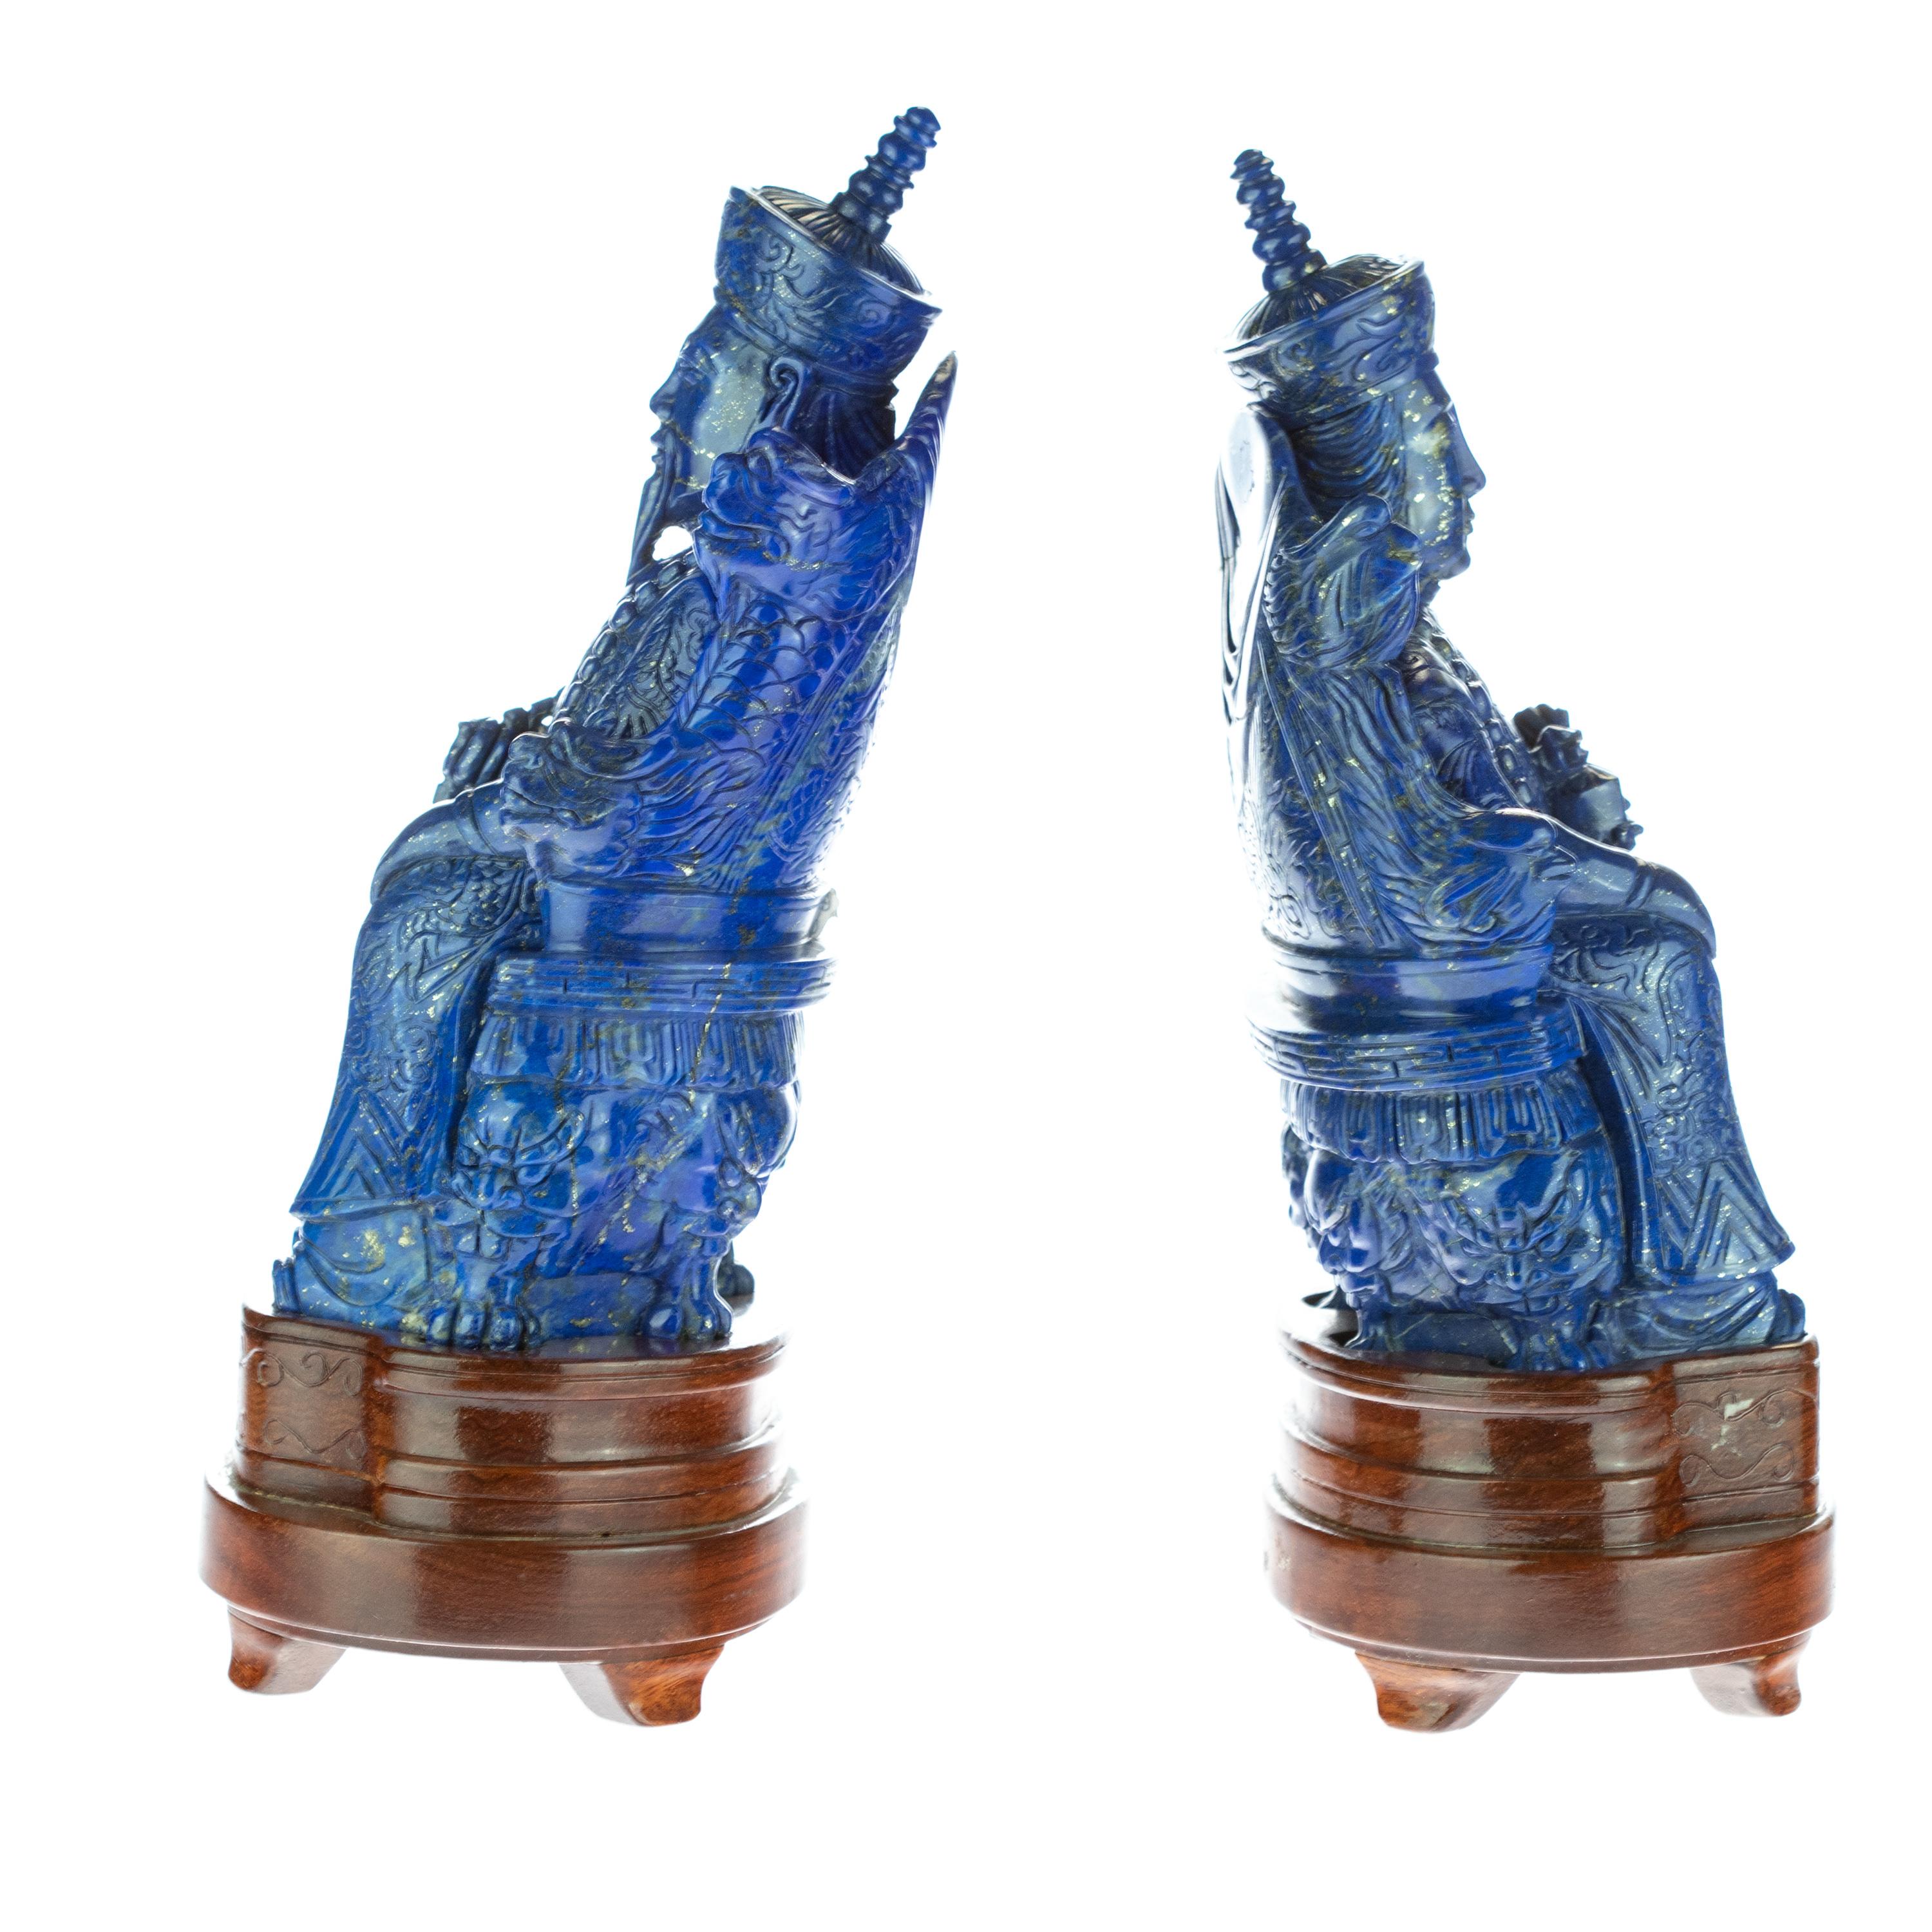 Hong Kong Lapis Lazuli King Queen Carved Blue Gemstone Artisanal Royalty Statue Sculpture For Sale